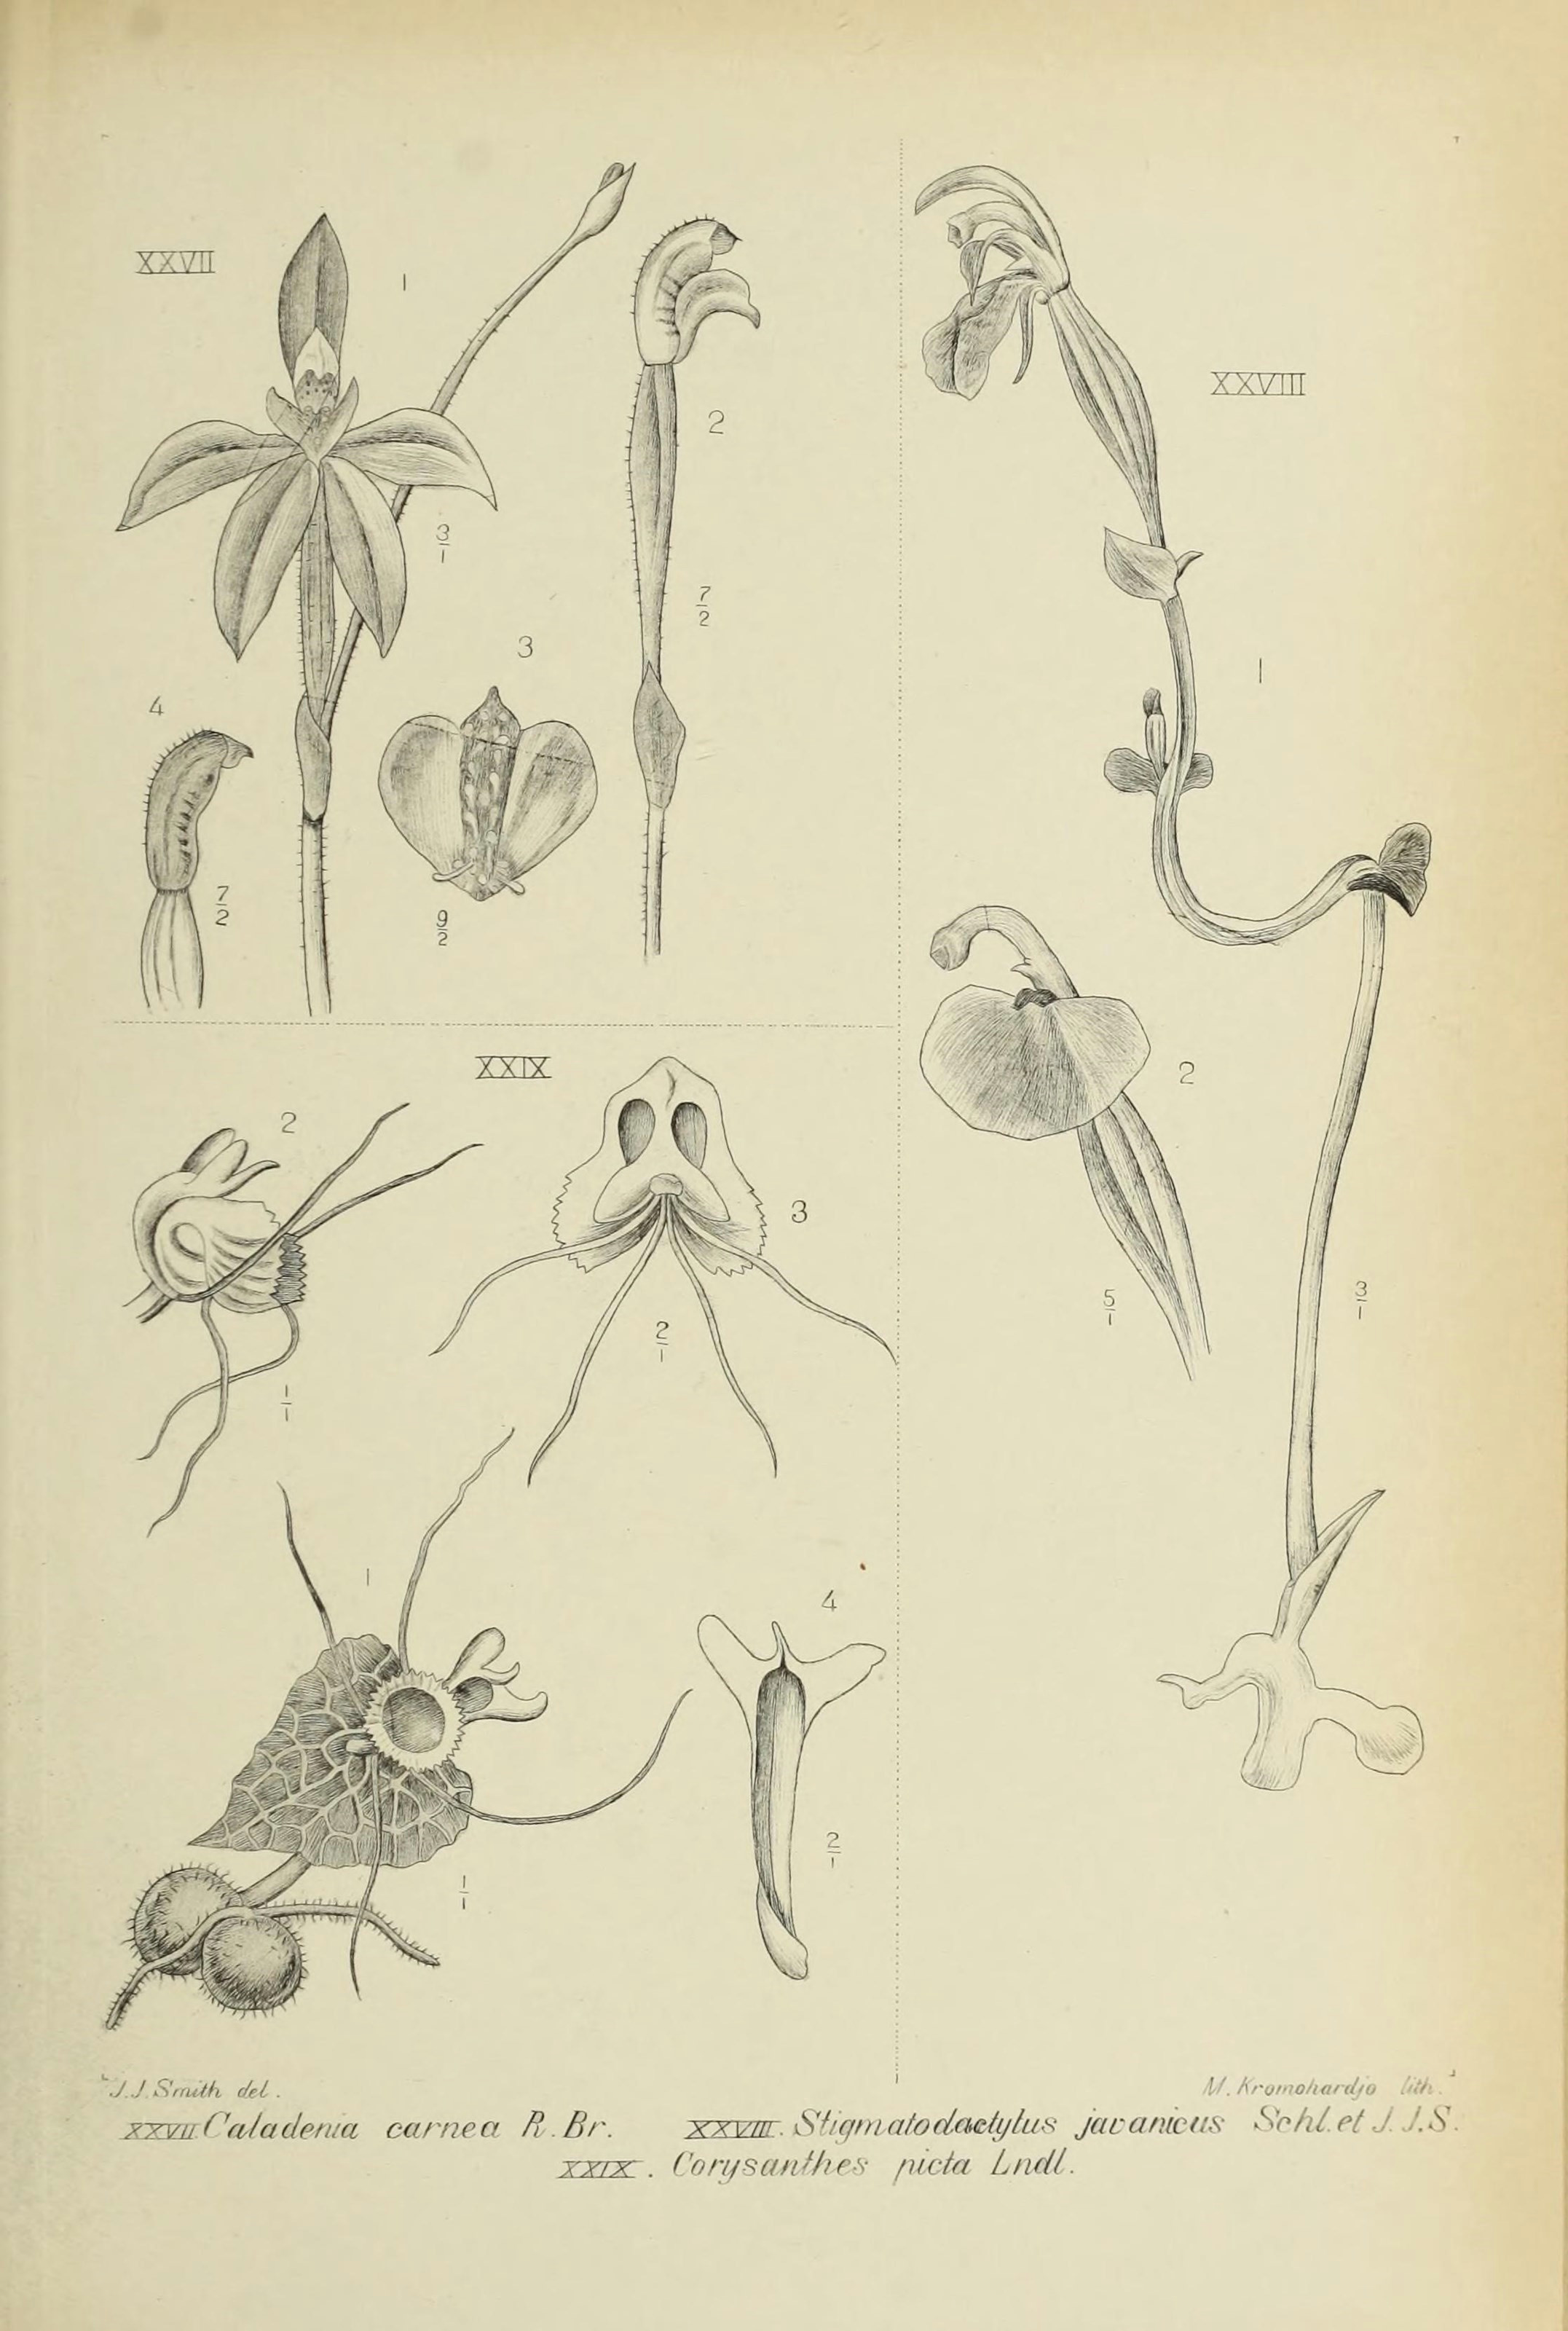 stigmatodactylus javanicus